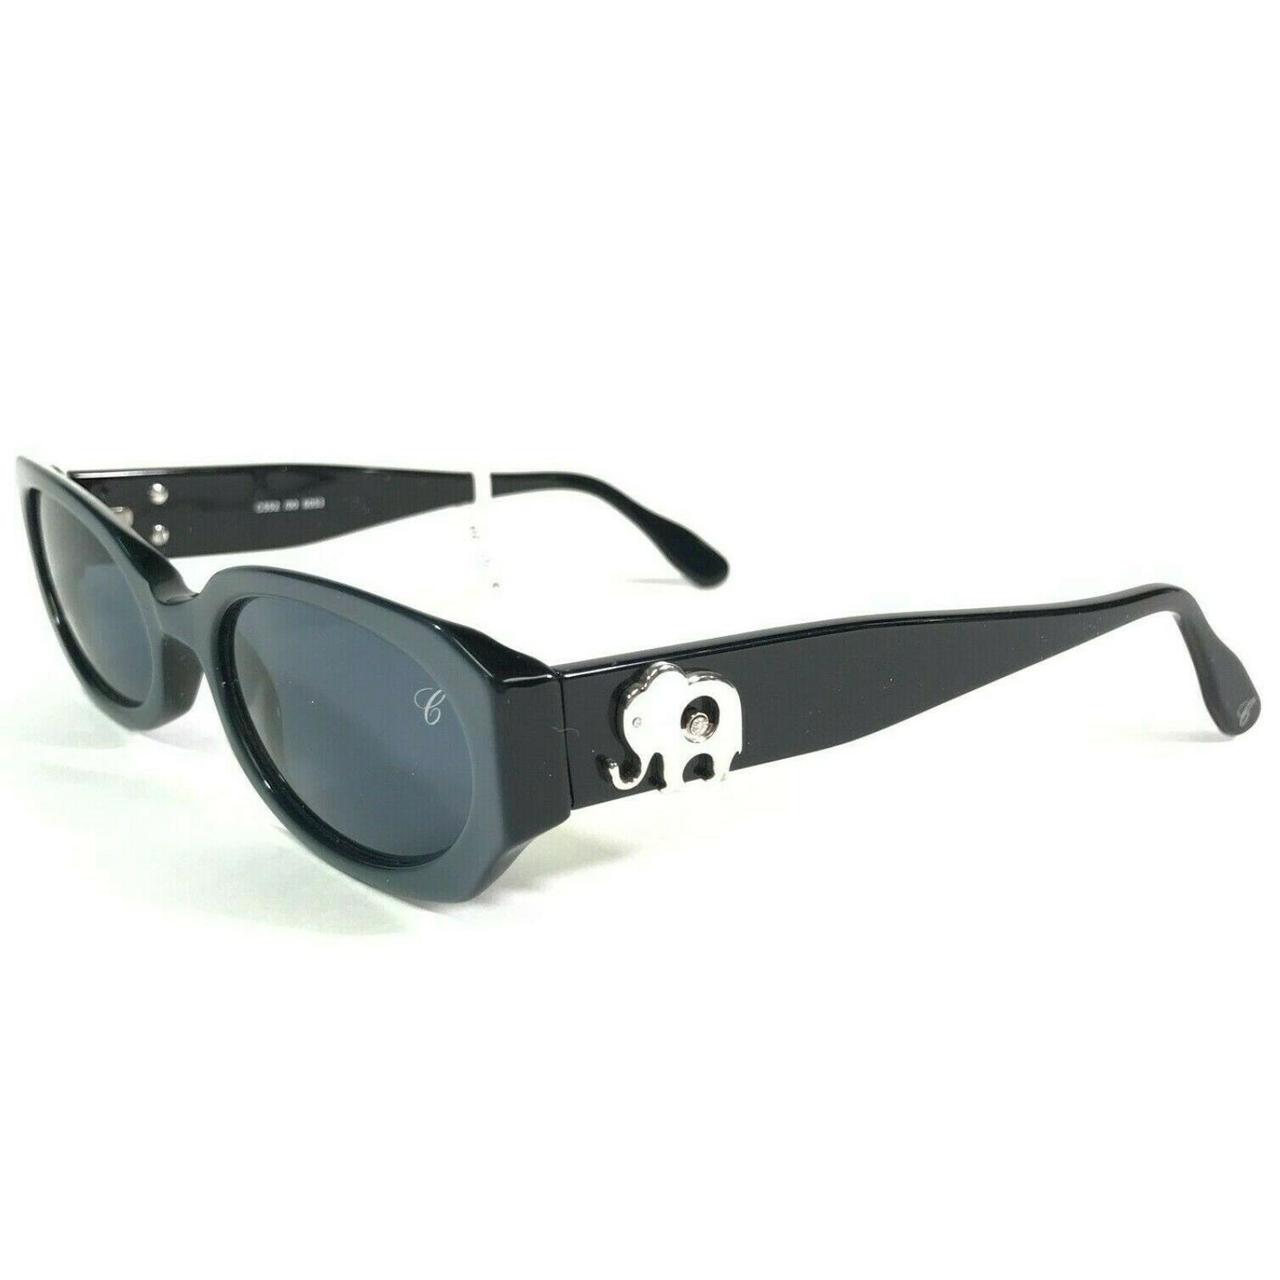 Chopard Women's Blue and Black Sunglasses